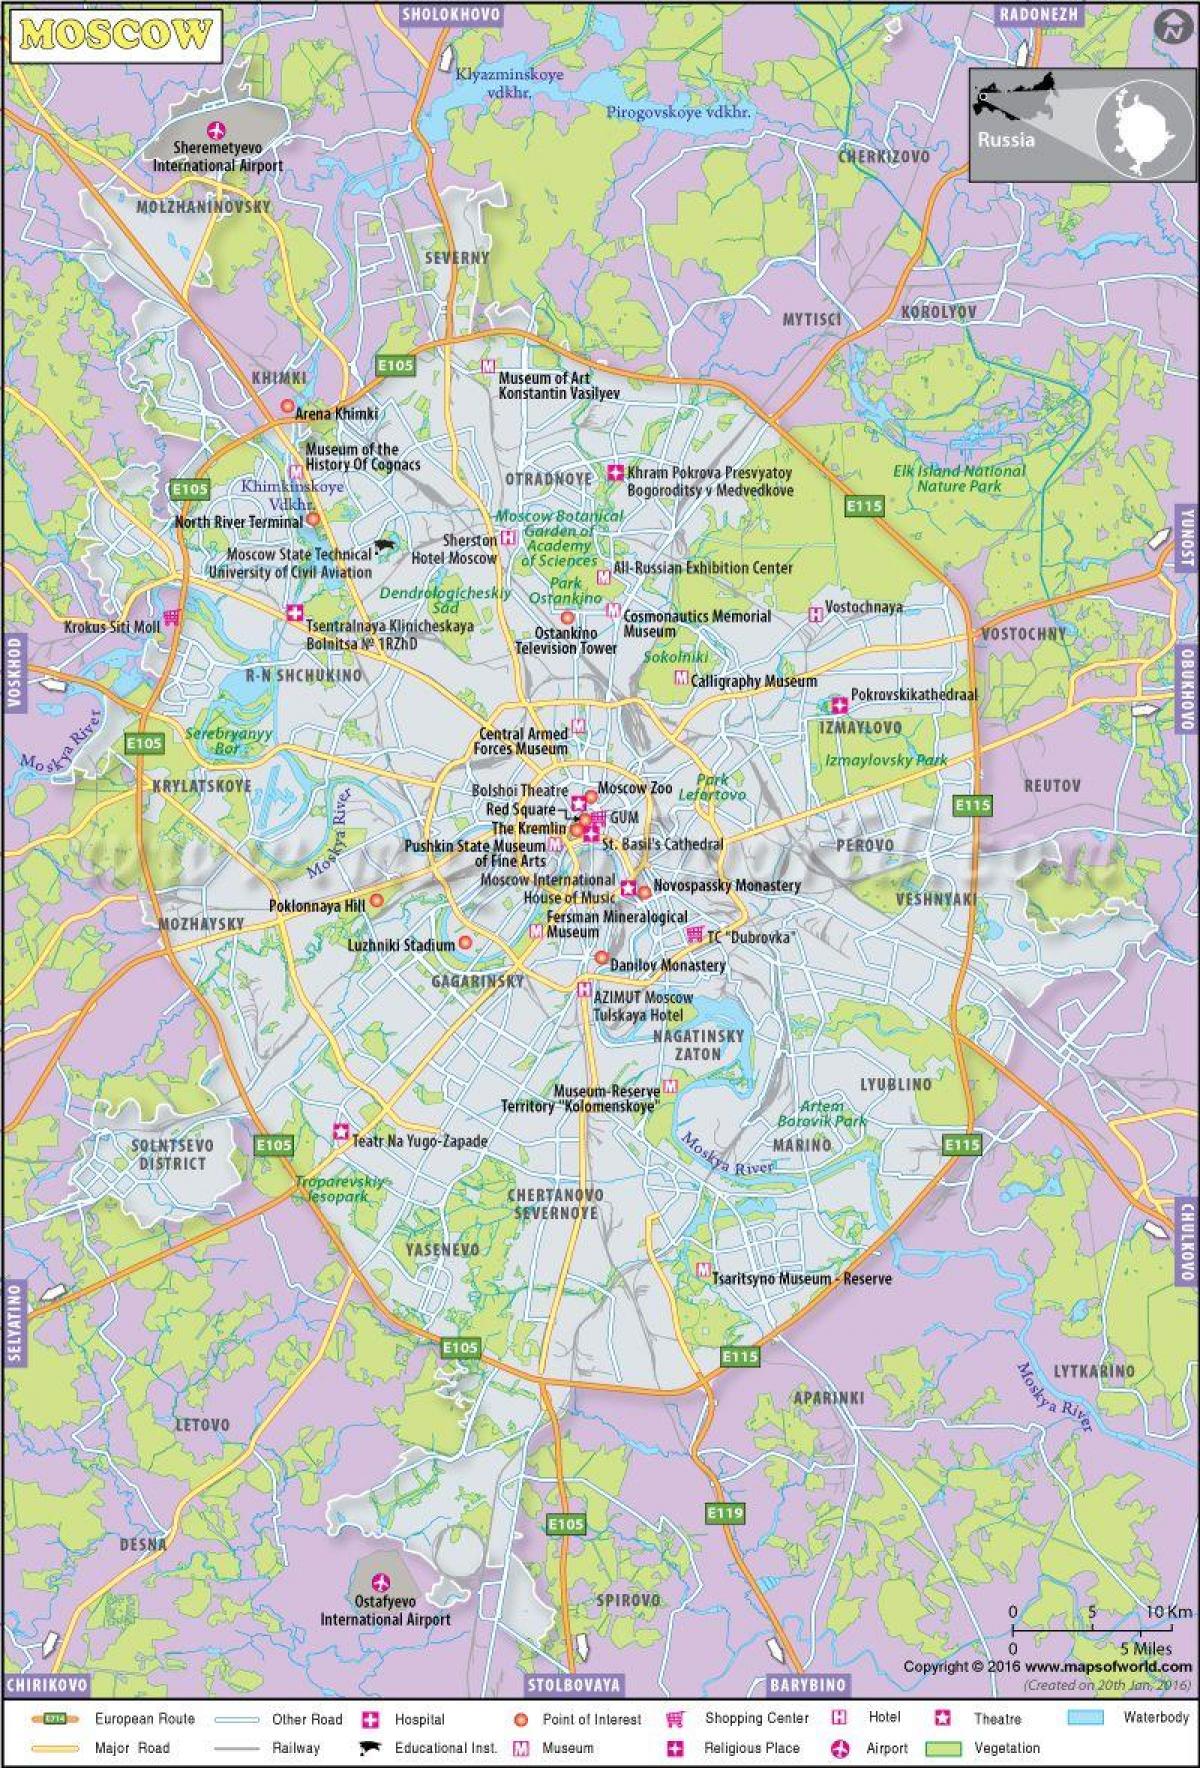 mappa di Mosca id